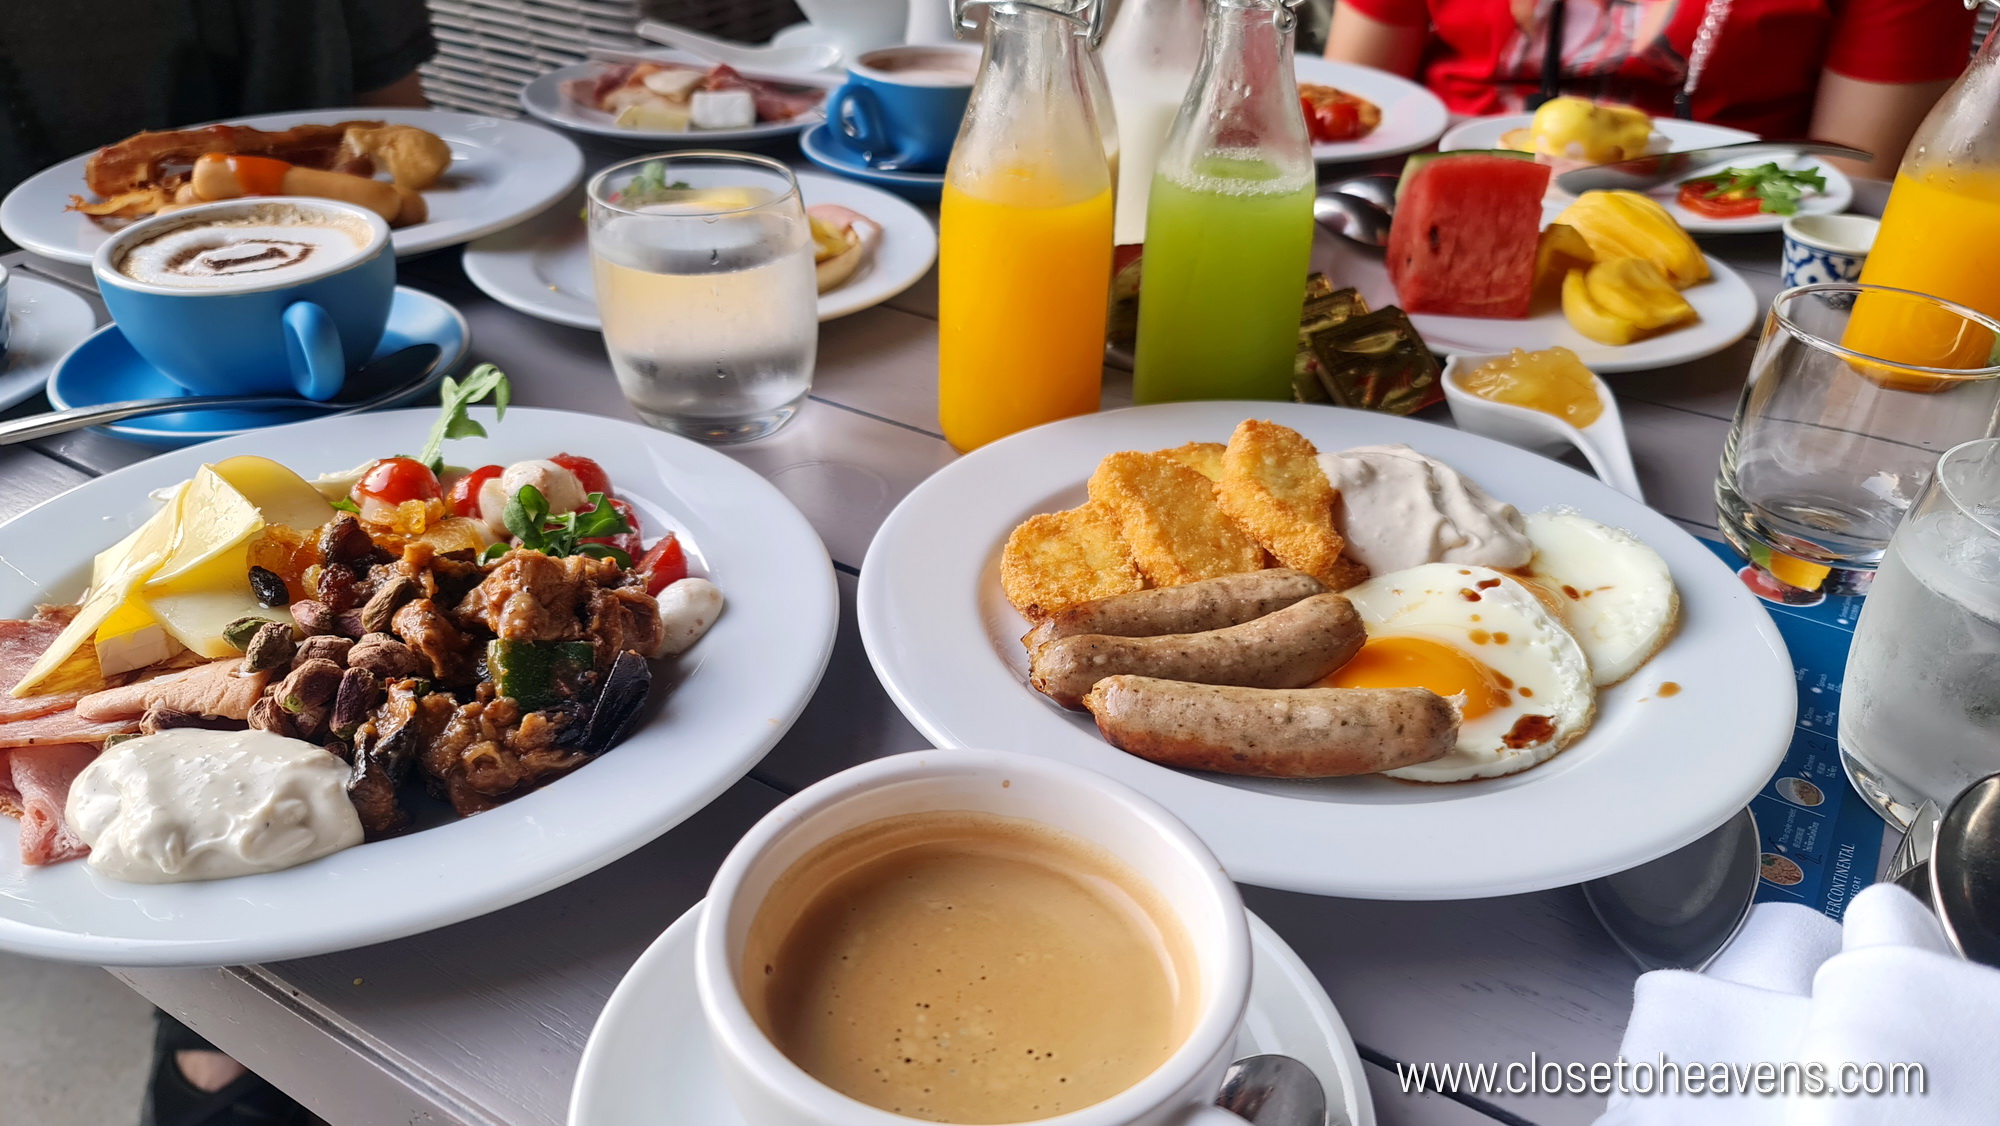 InterContinental Hua Hin Resort | รีวิวห้องพัก & บุฟเฟ่ต์อาหารเช้า